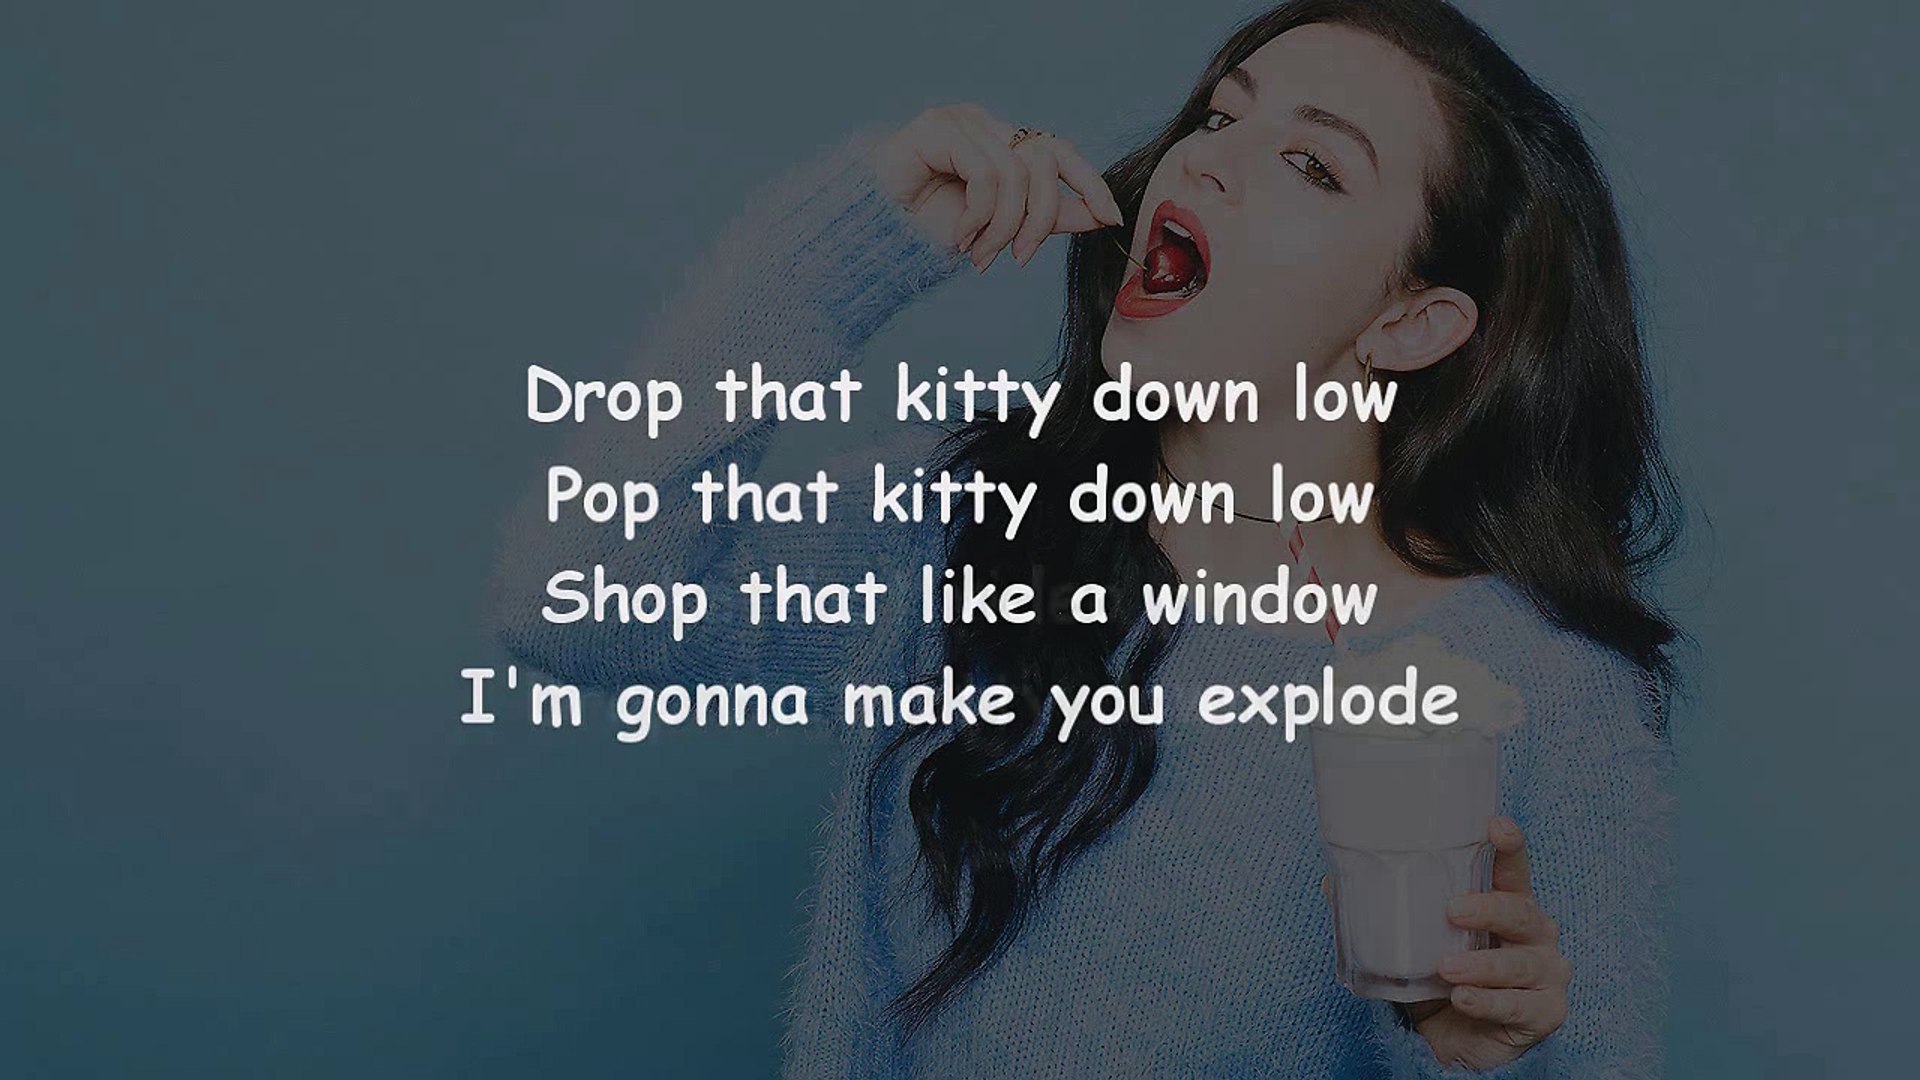 Pop that kitty down low